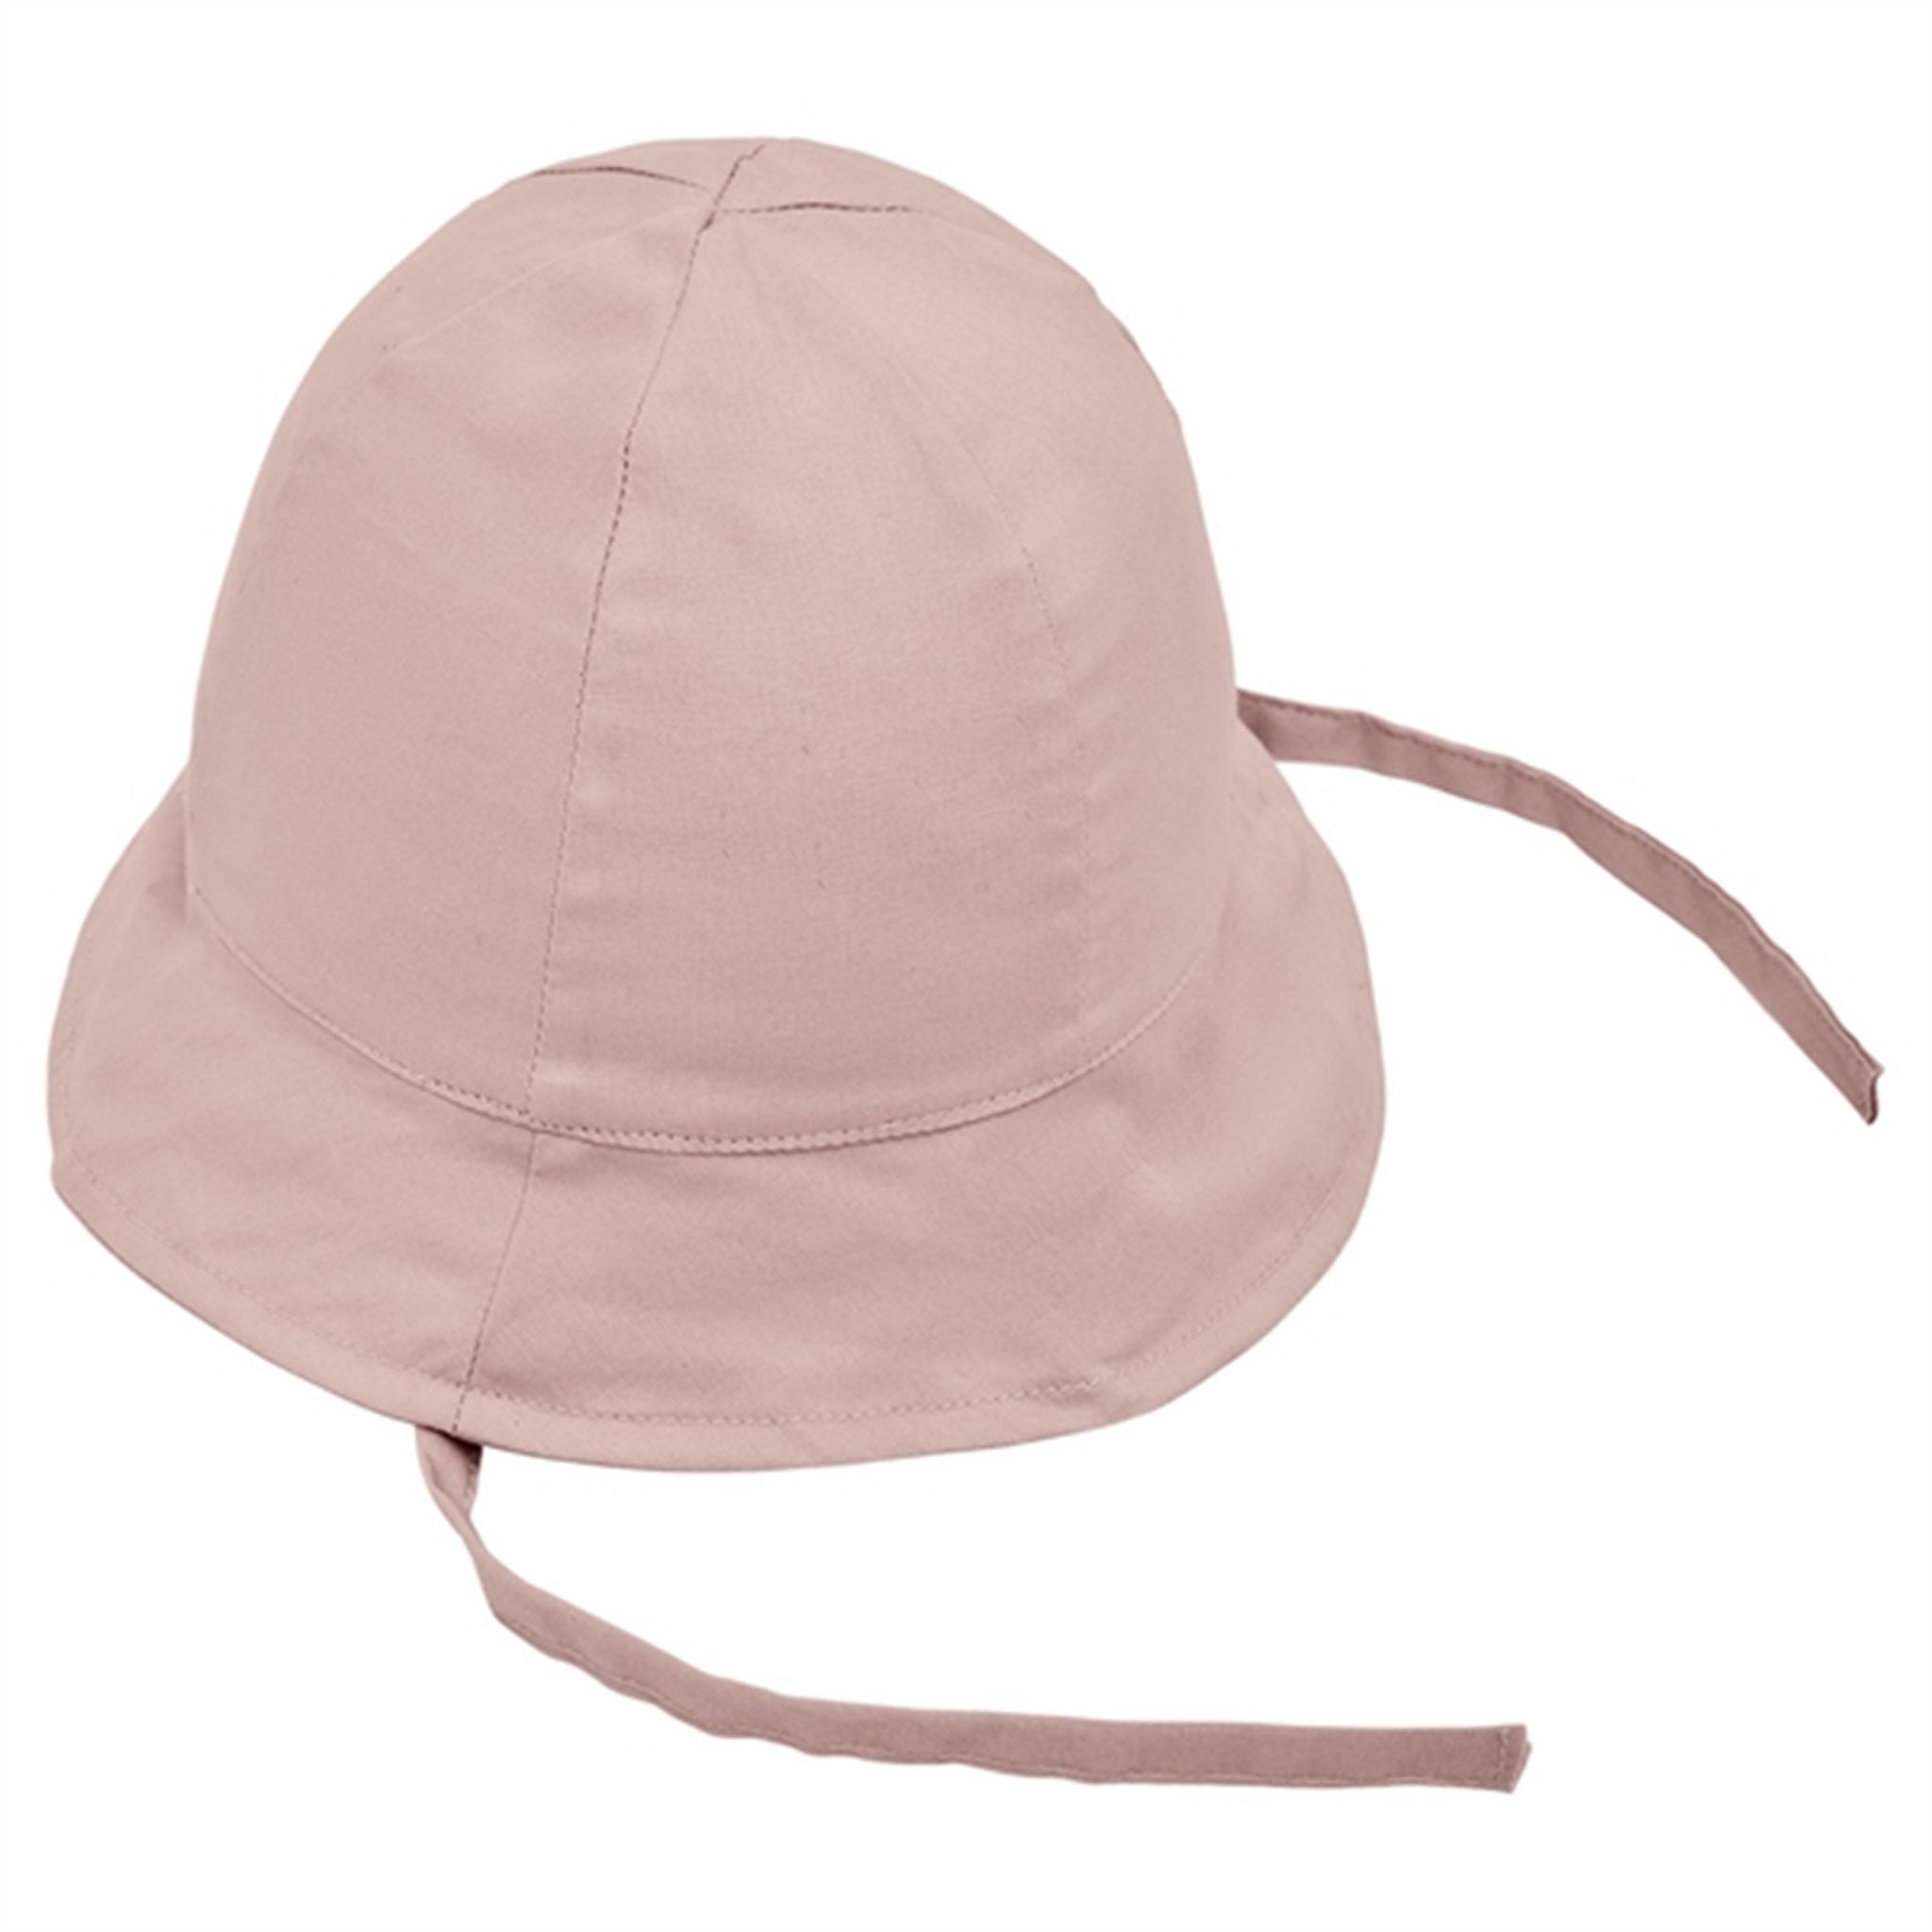 Name it Rose Smoke Zanny UV Sun Hat with Earflaps